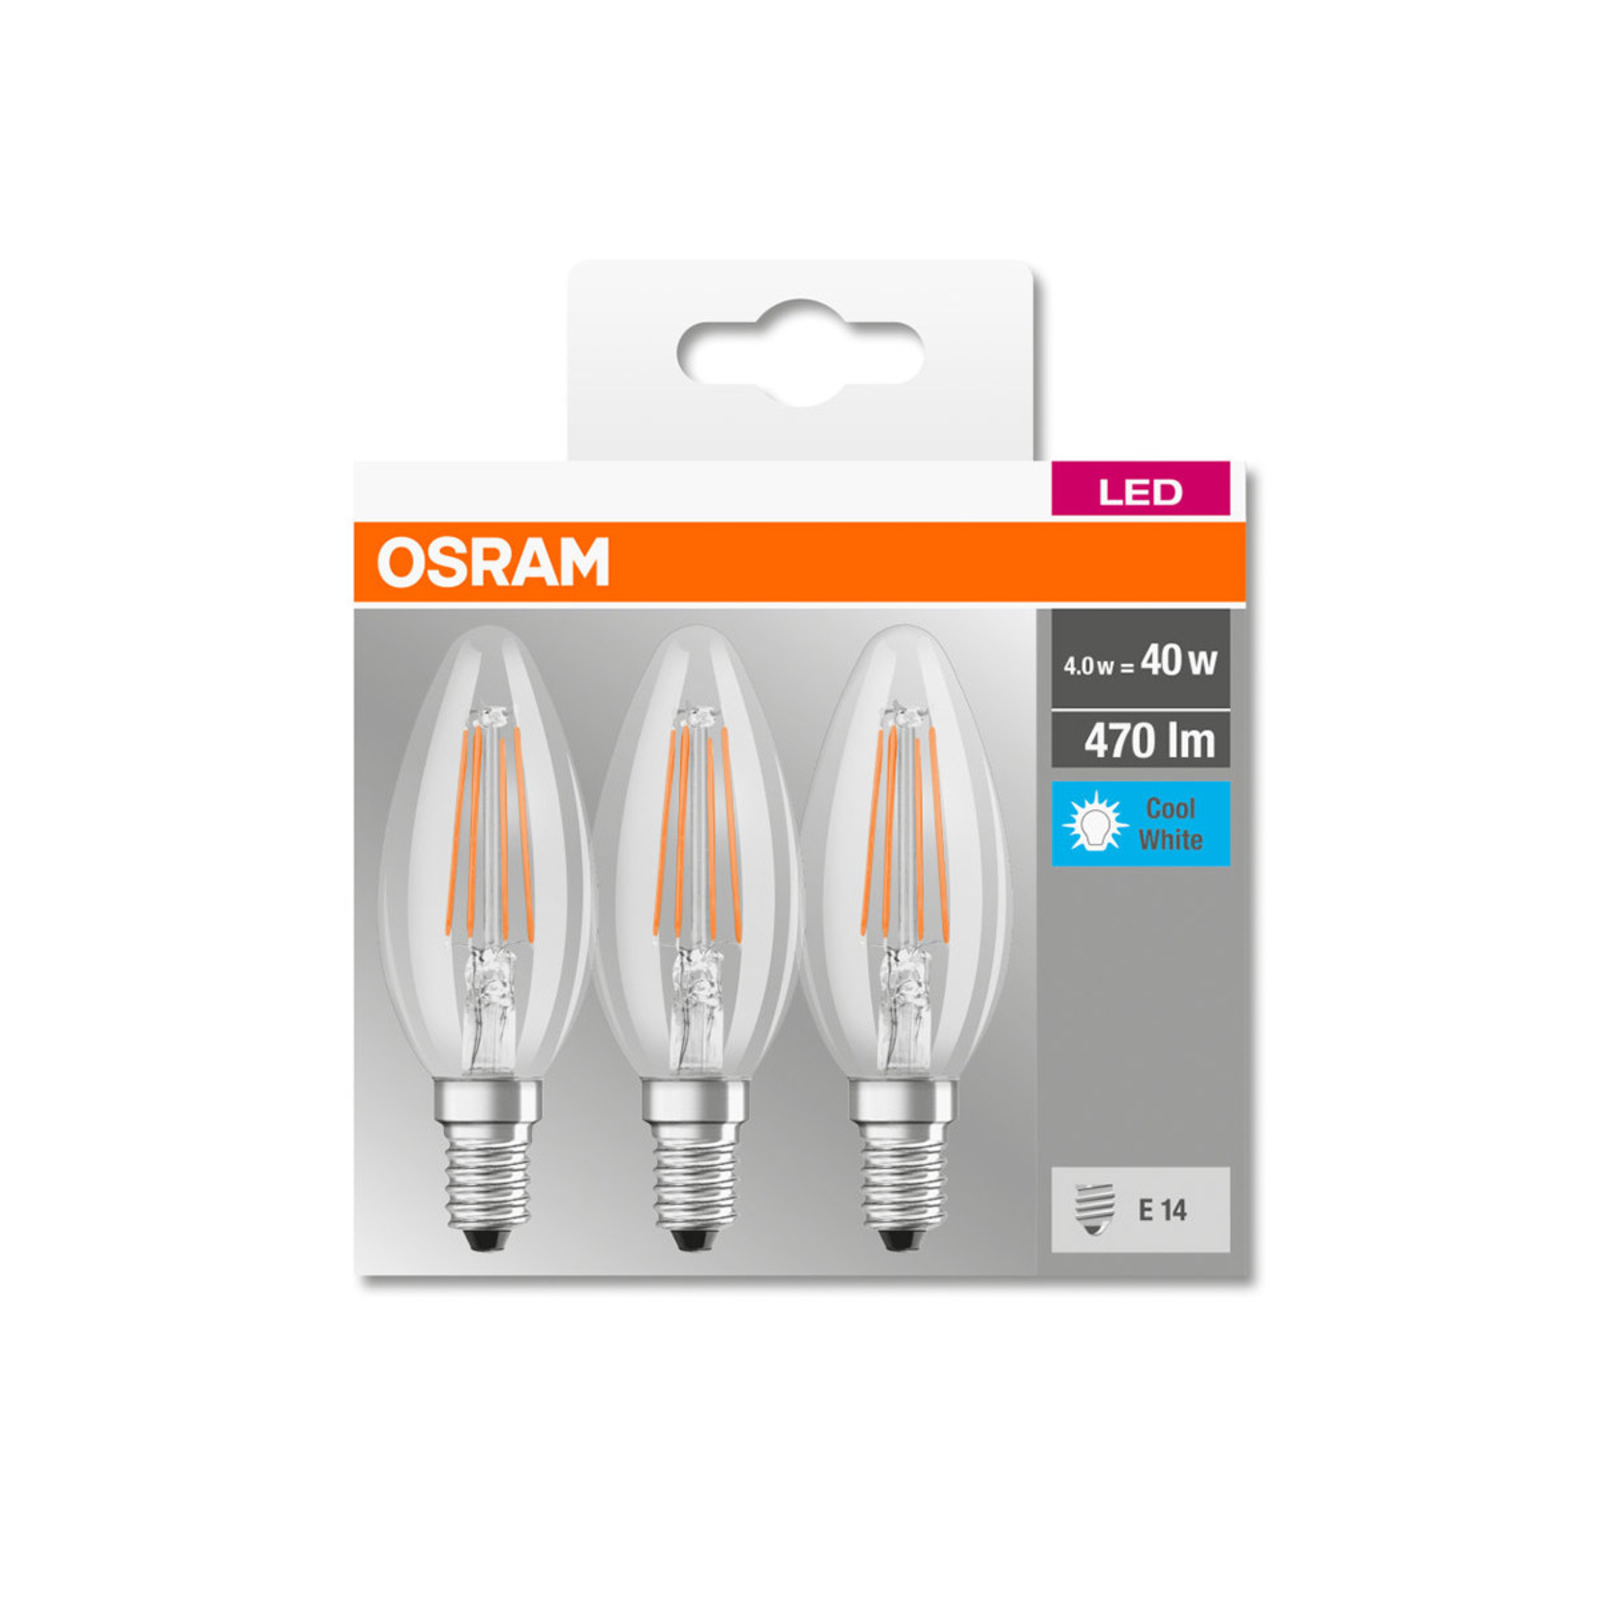 OSRAM świeca LED E14 4W filament 470lm 3 szt.